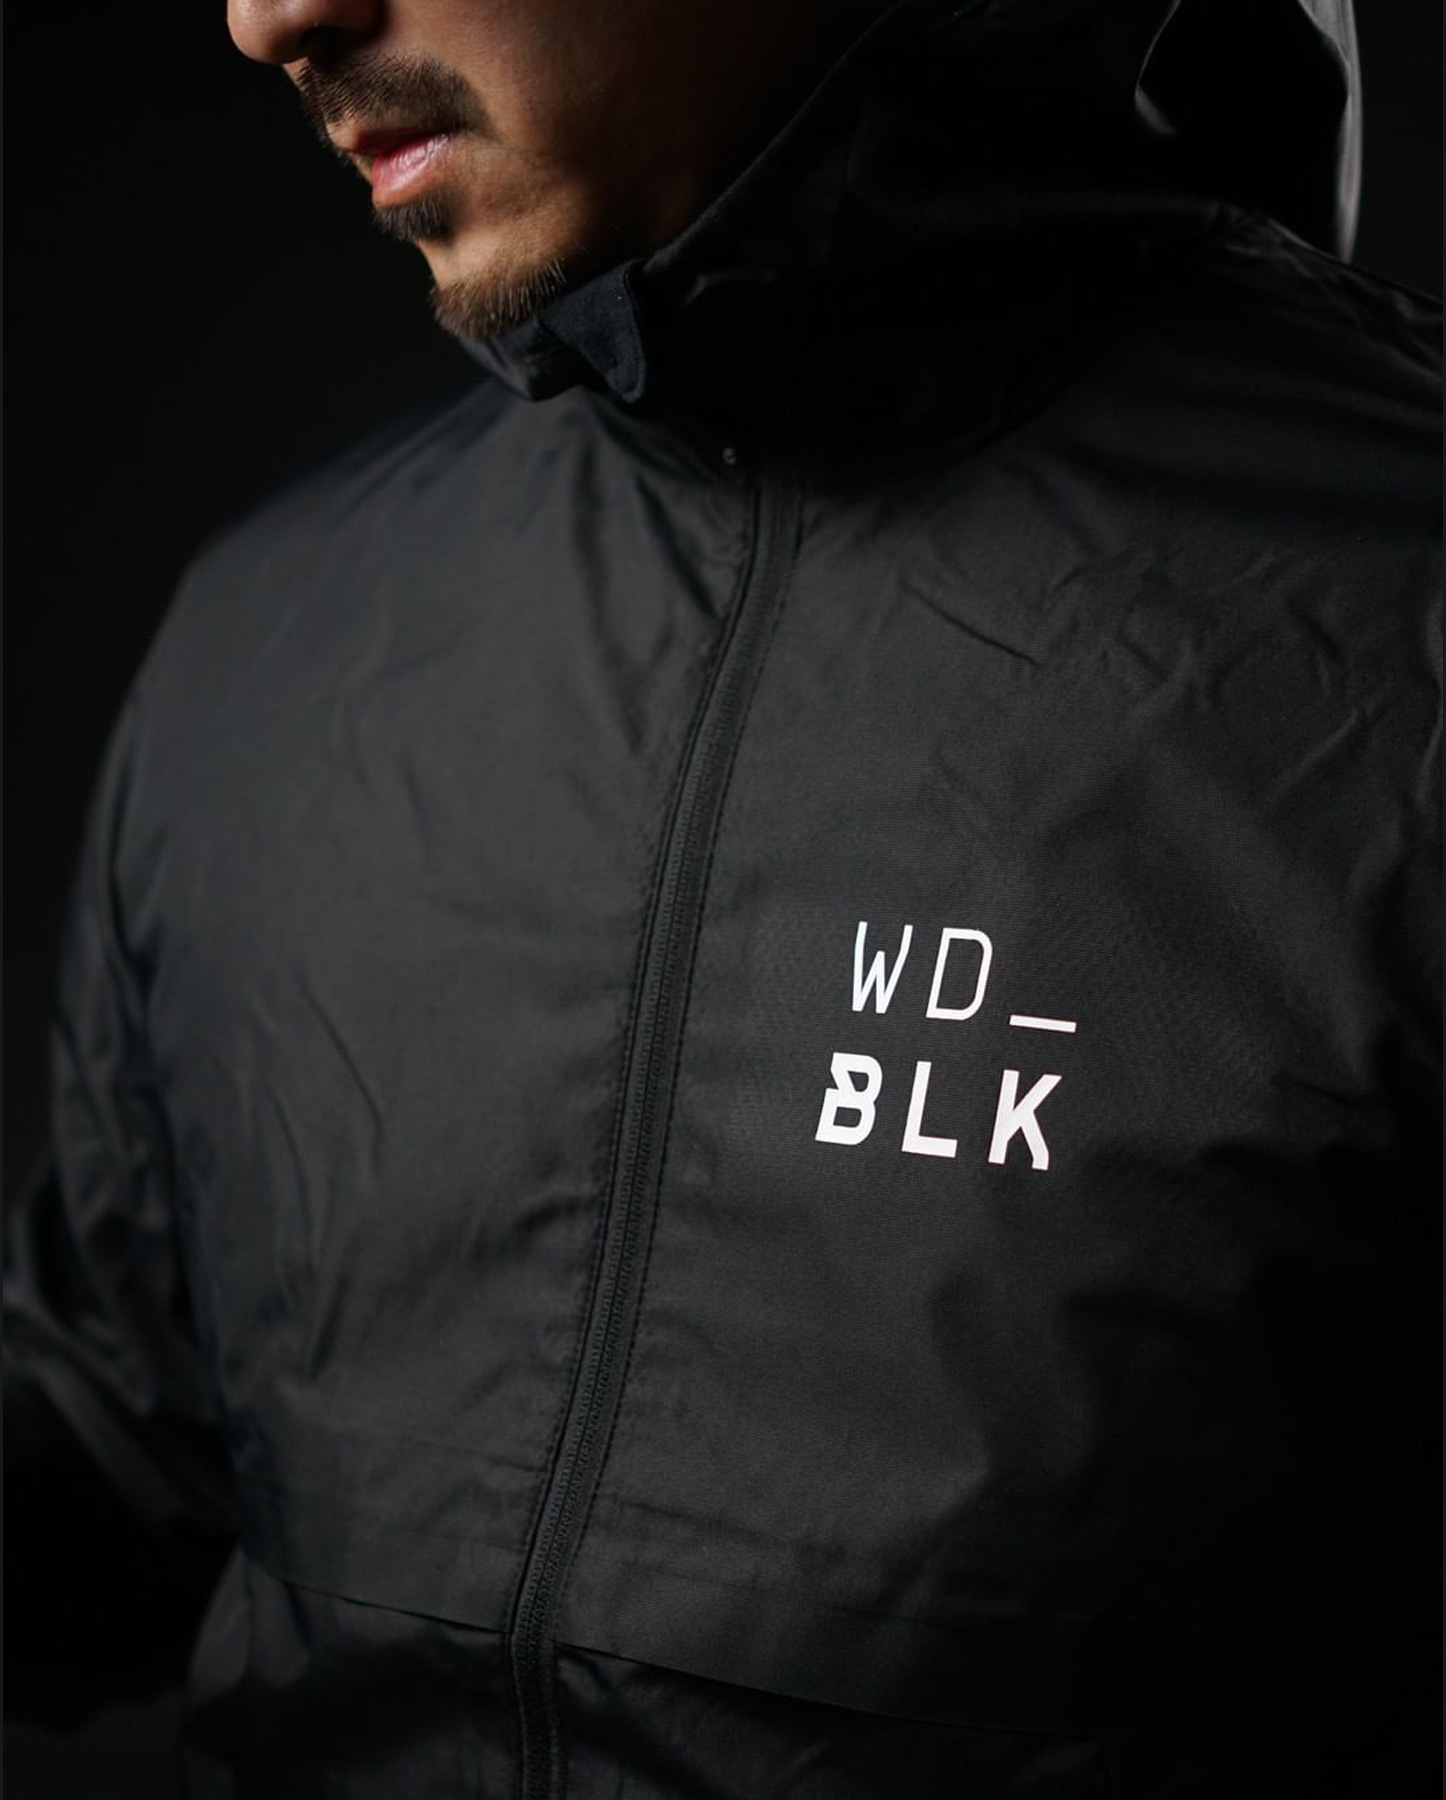 WD_Blk_jacket